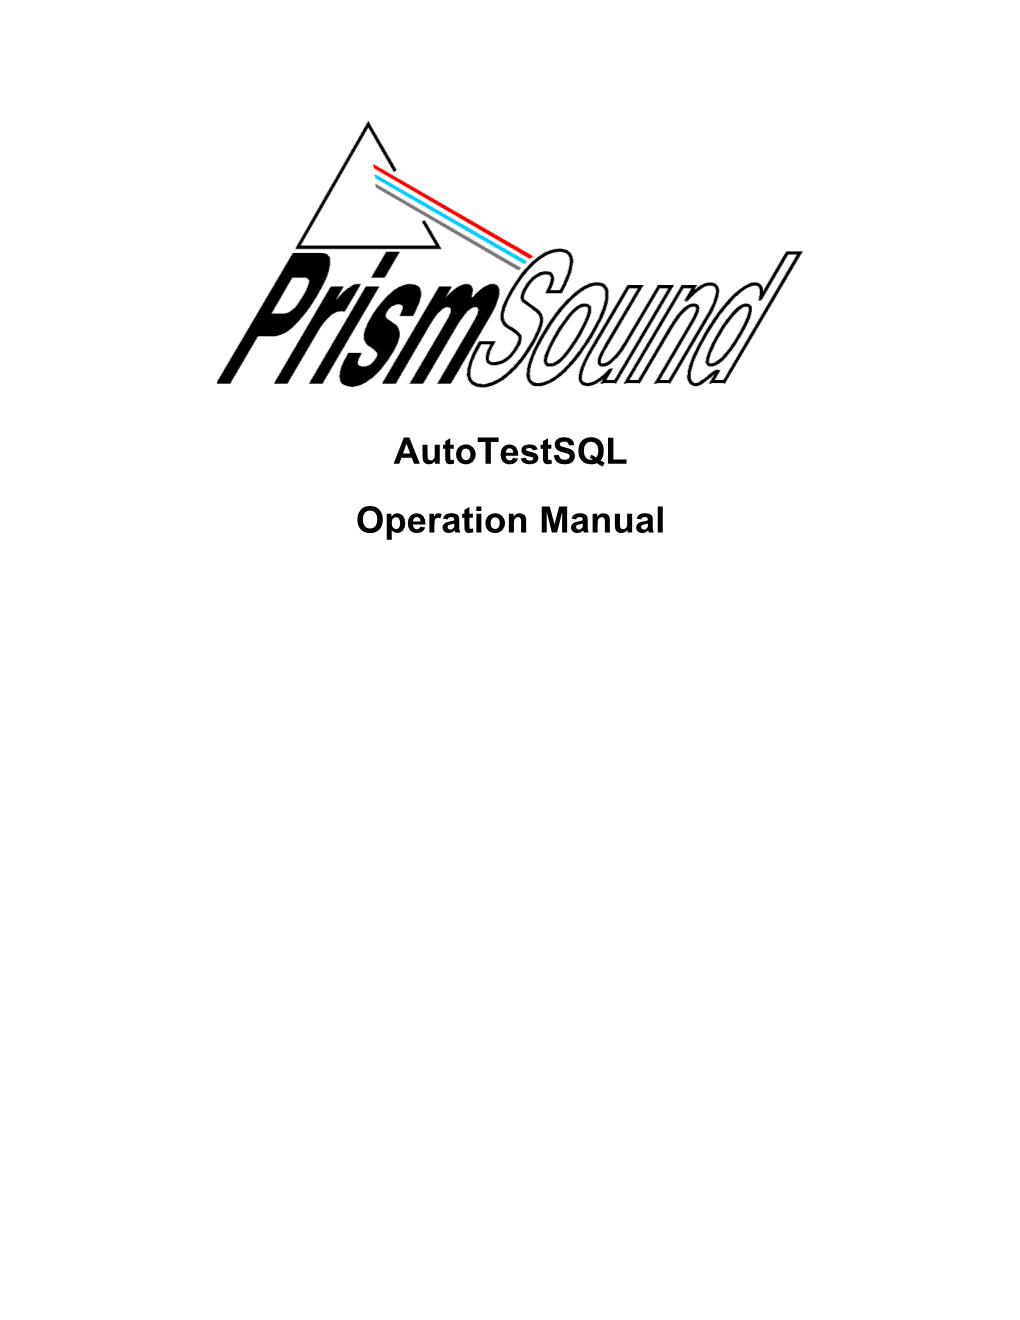 Autotestsql Operation Manual